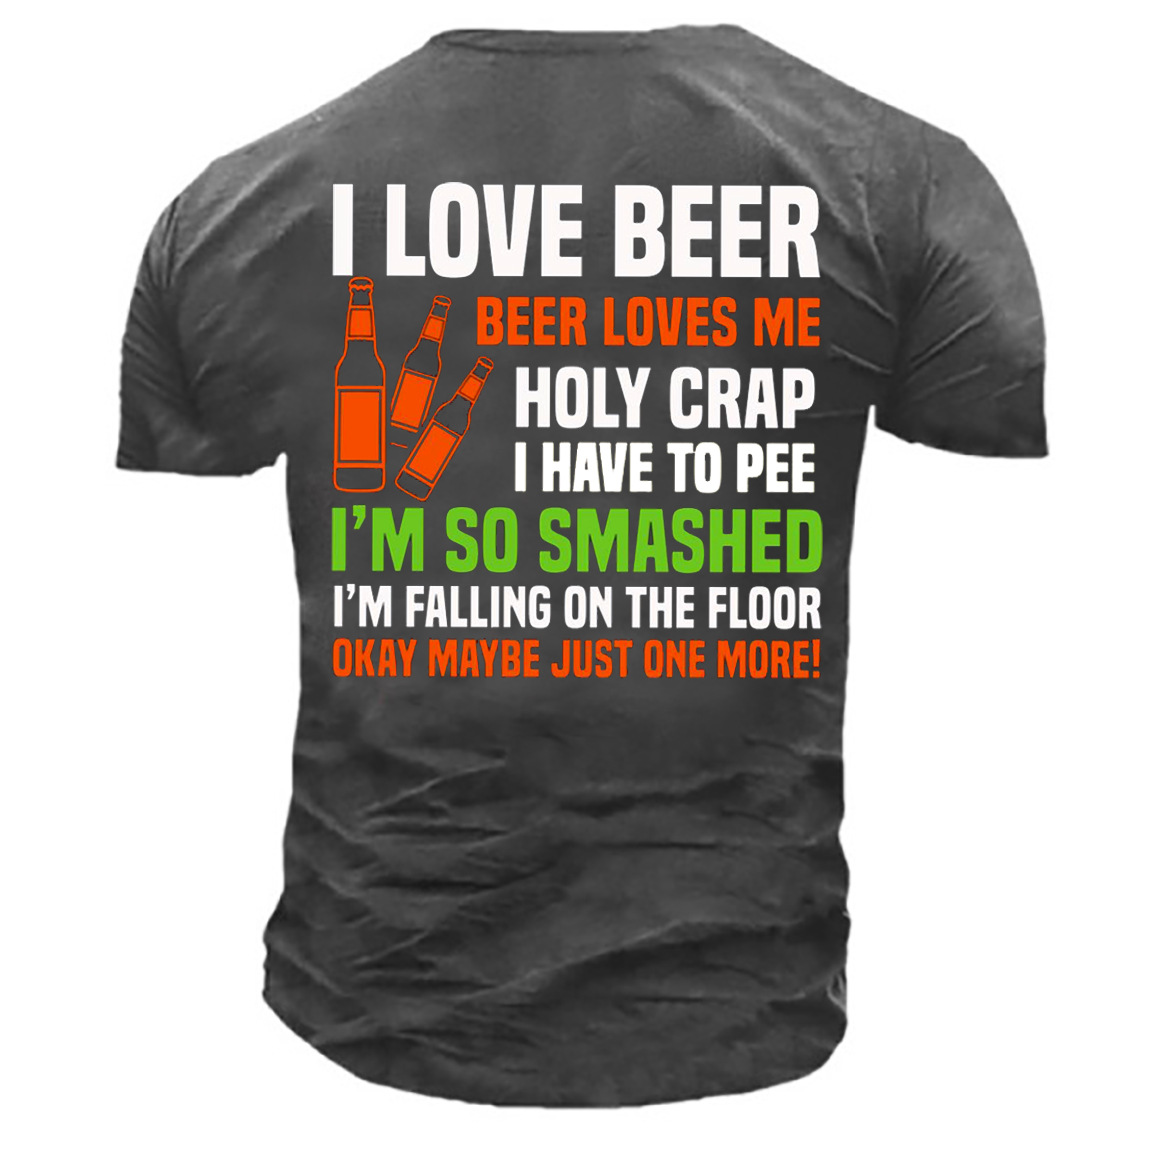 Men's I Love Beer Chic I'm So Smashed Print Cotton T-shirt